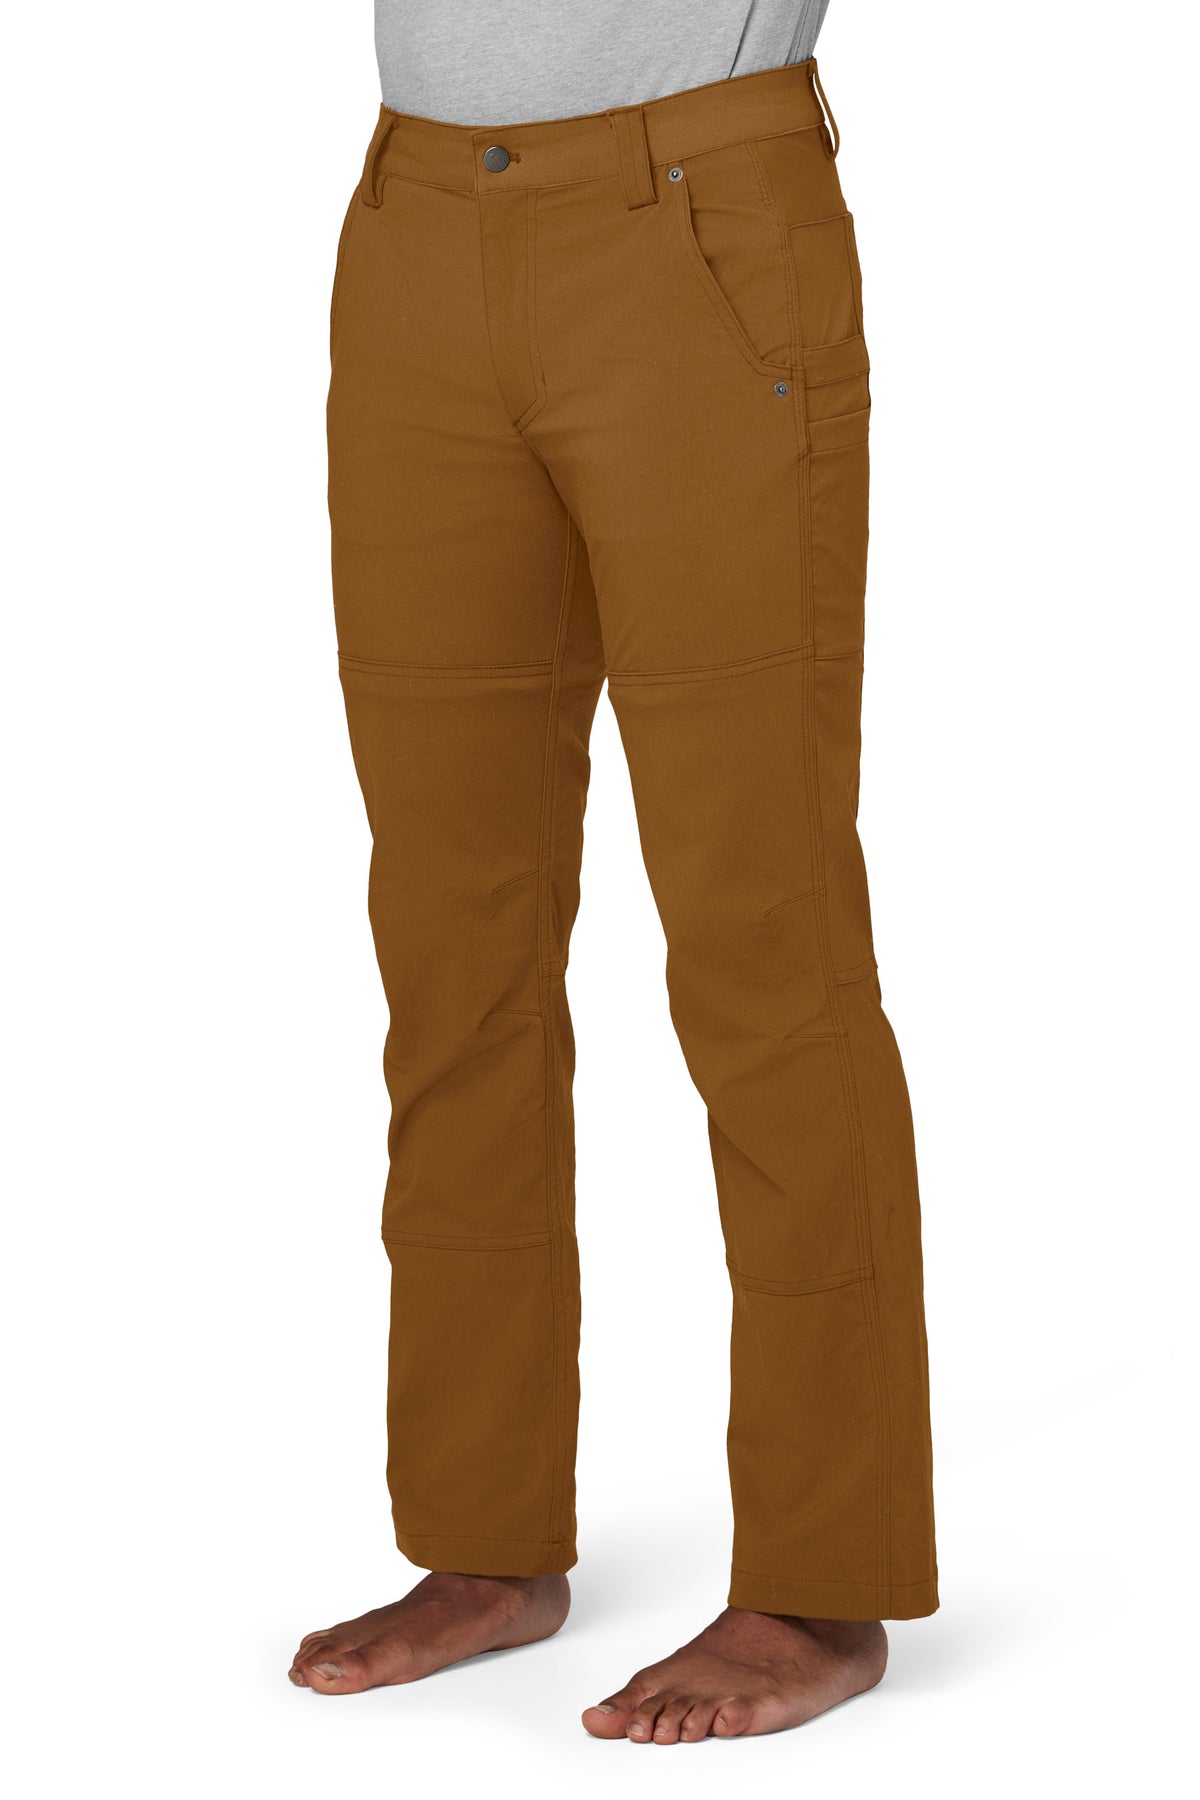 Skylinewears Men cargo pants Workwear Trousers Utility Work Pants with  Cordura Knee Reinforcement Black W40-L32 - Walmart.com